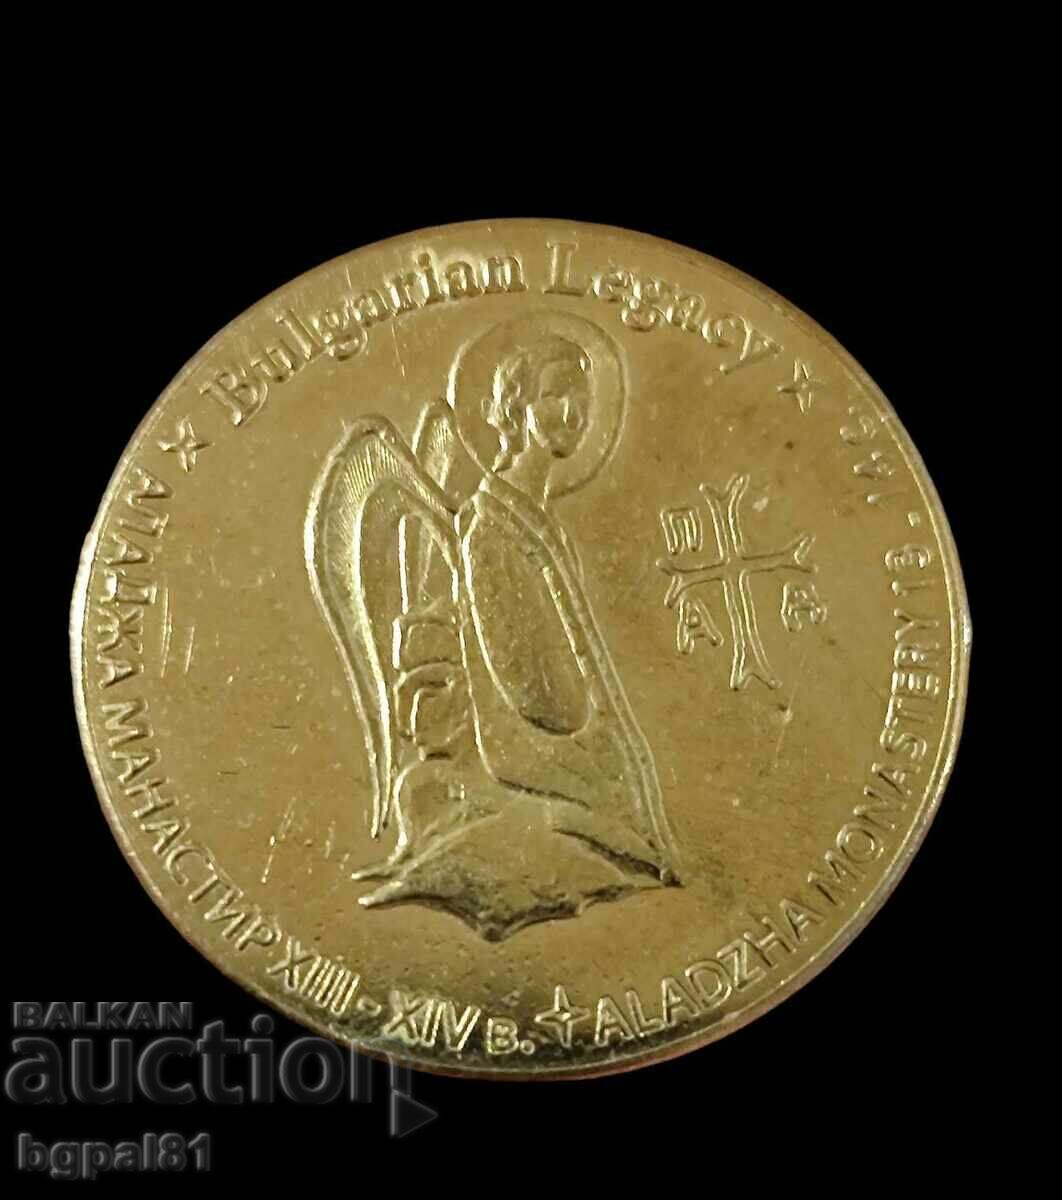 Aladzha Monastery - "Bulgarian legacy" medal issue